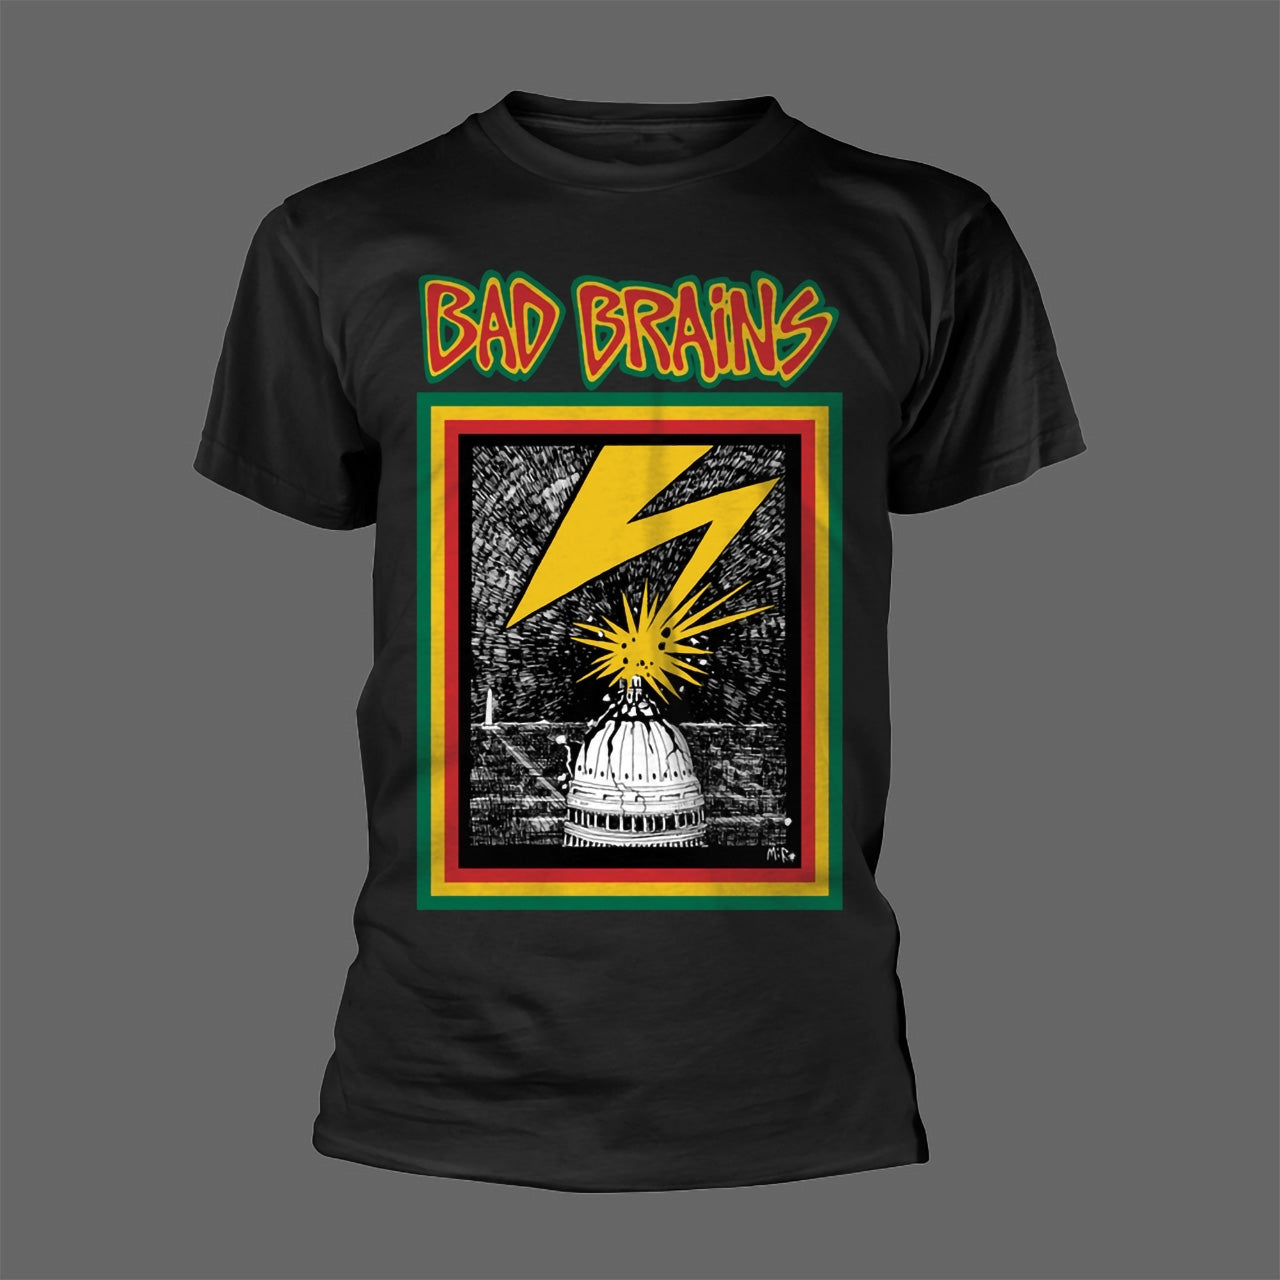 Bad Brains - Bad Brains (T-Shirt)